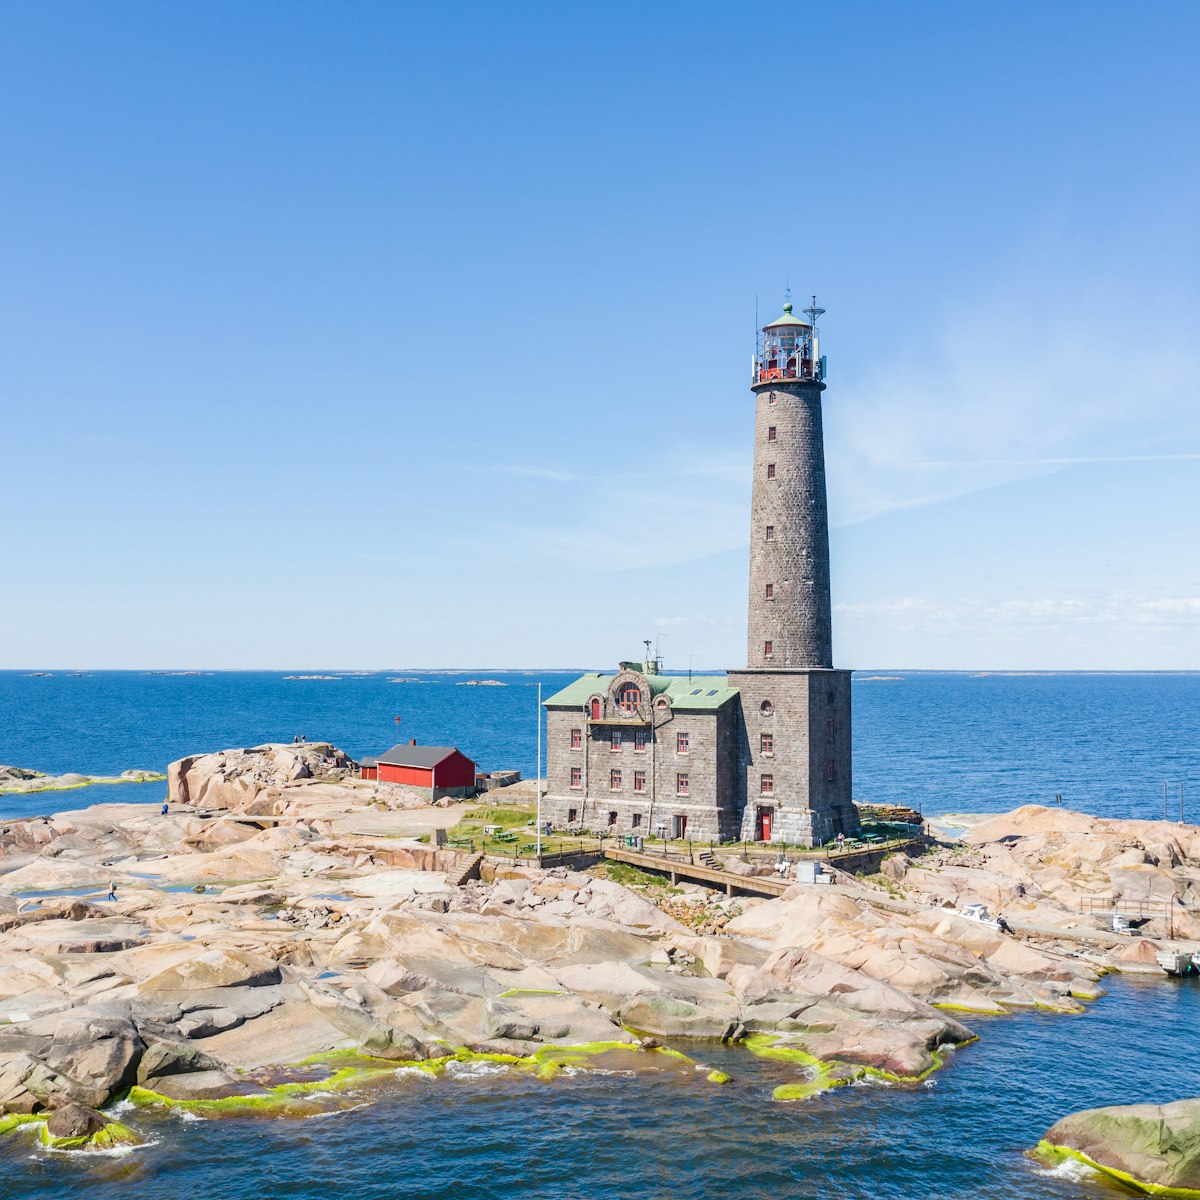 Bengtskär lighthouse in Gulf of Finland in summer.